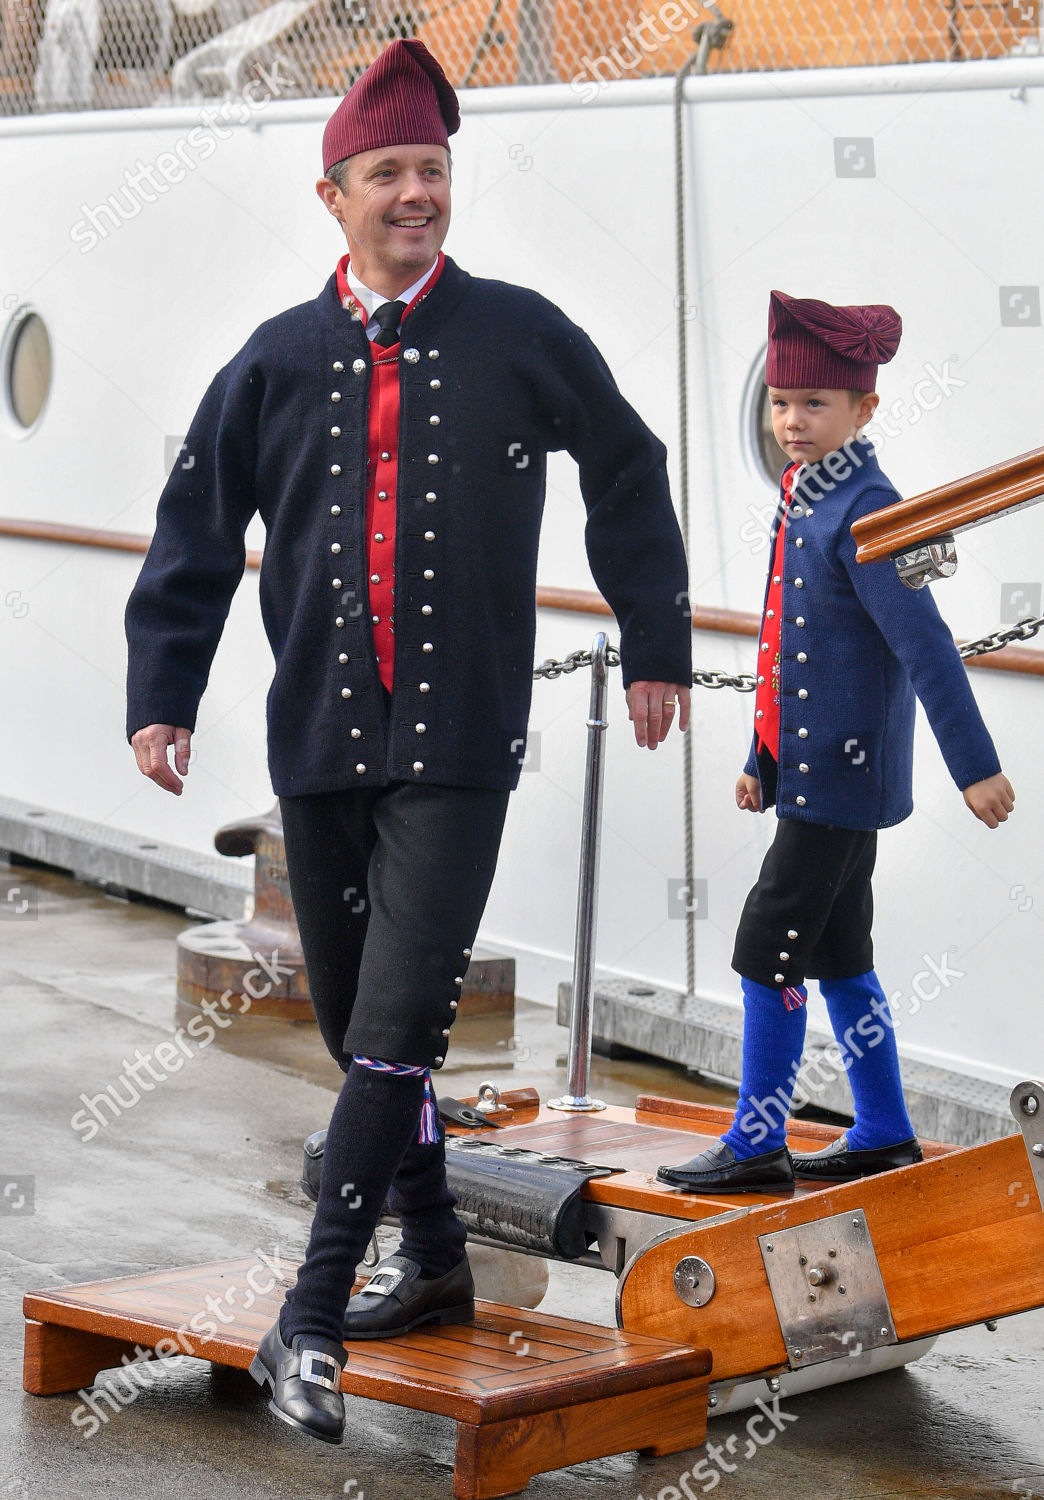 danish-royals-visit-to-the-faroe-islands-denmark-shutterstock-editorial-9800893cd.jpg